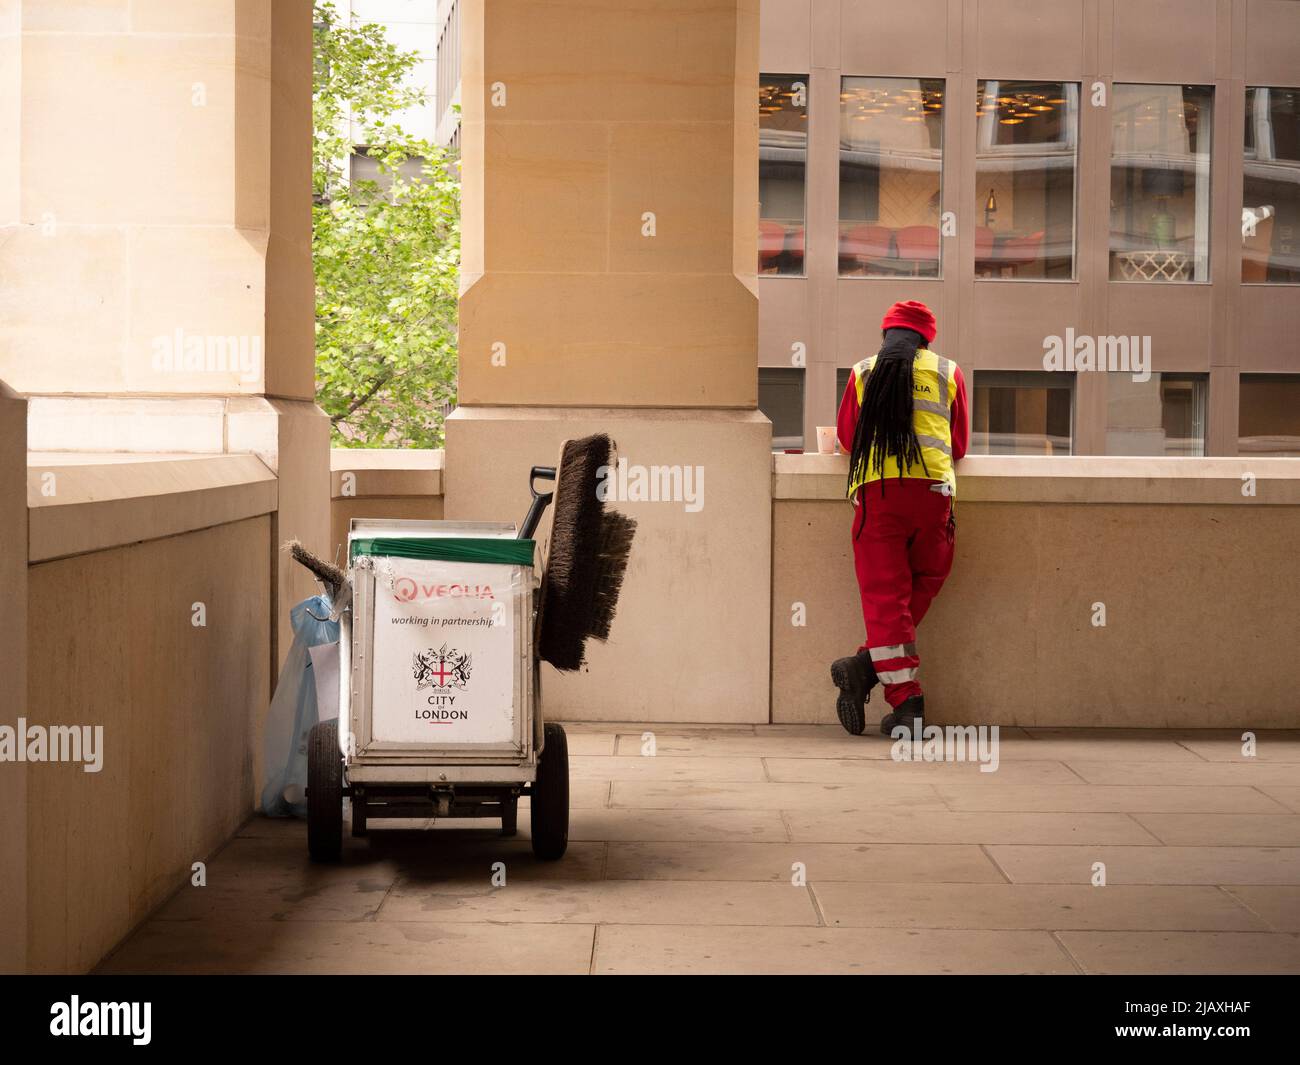 Veolia Street Cleaner City of London Stockfoto